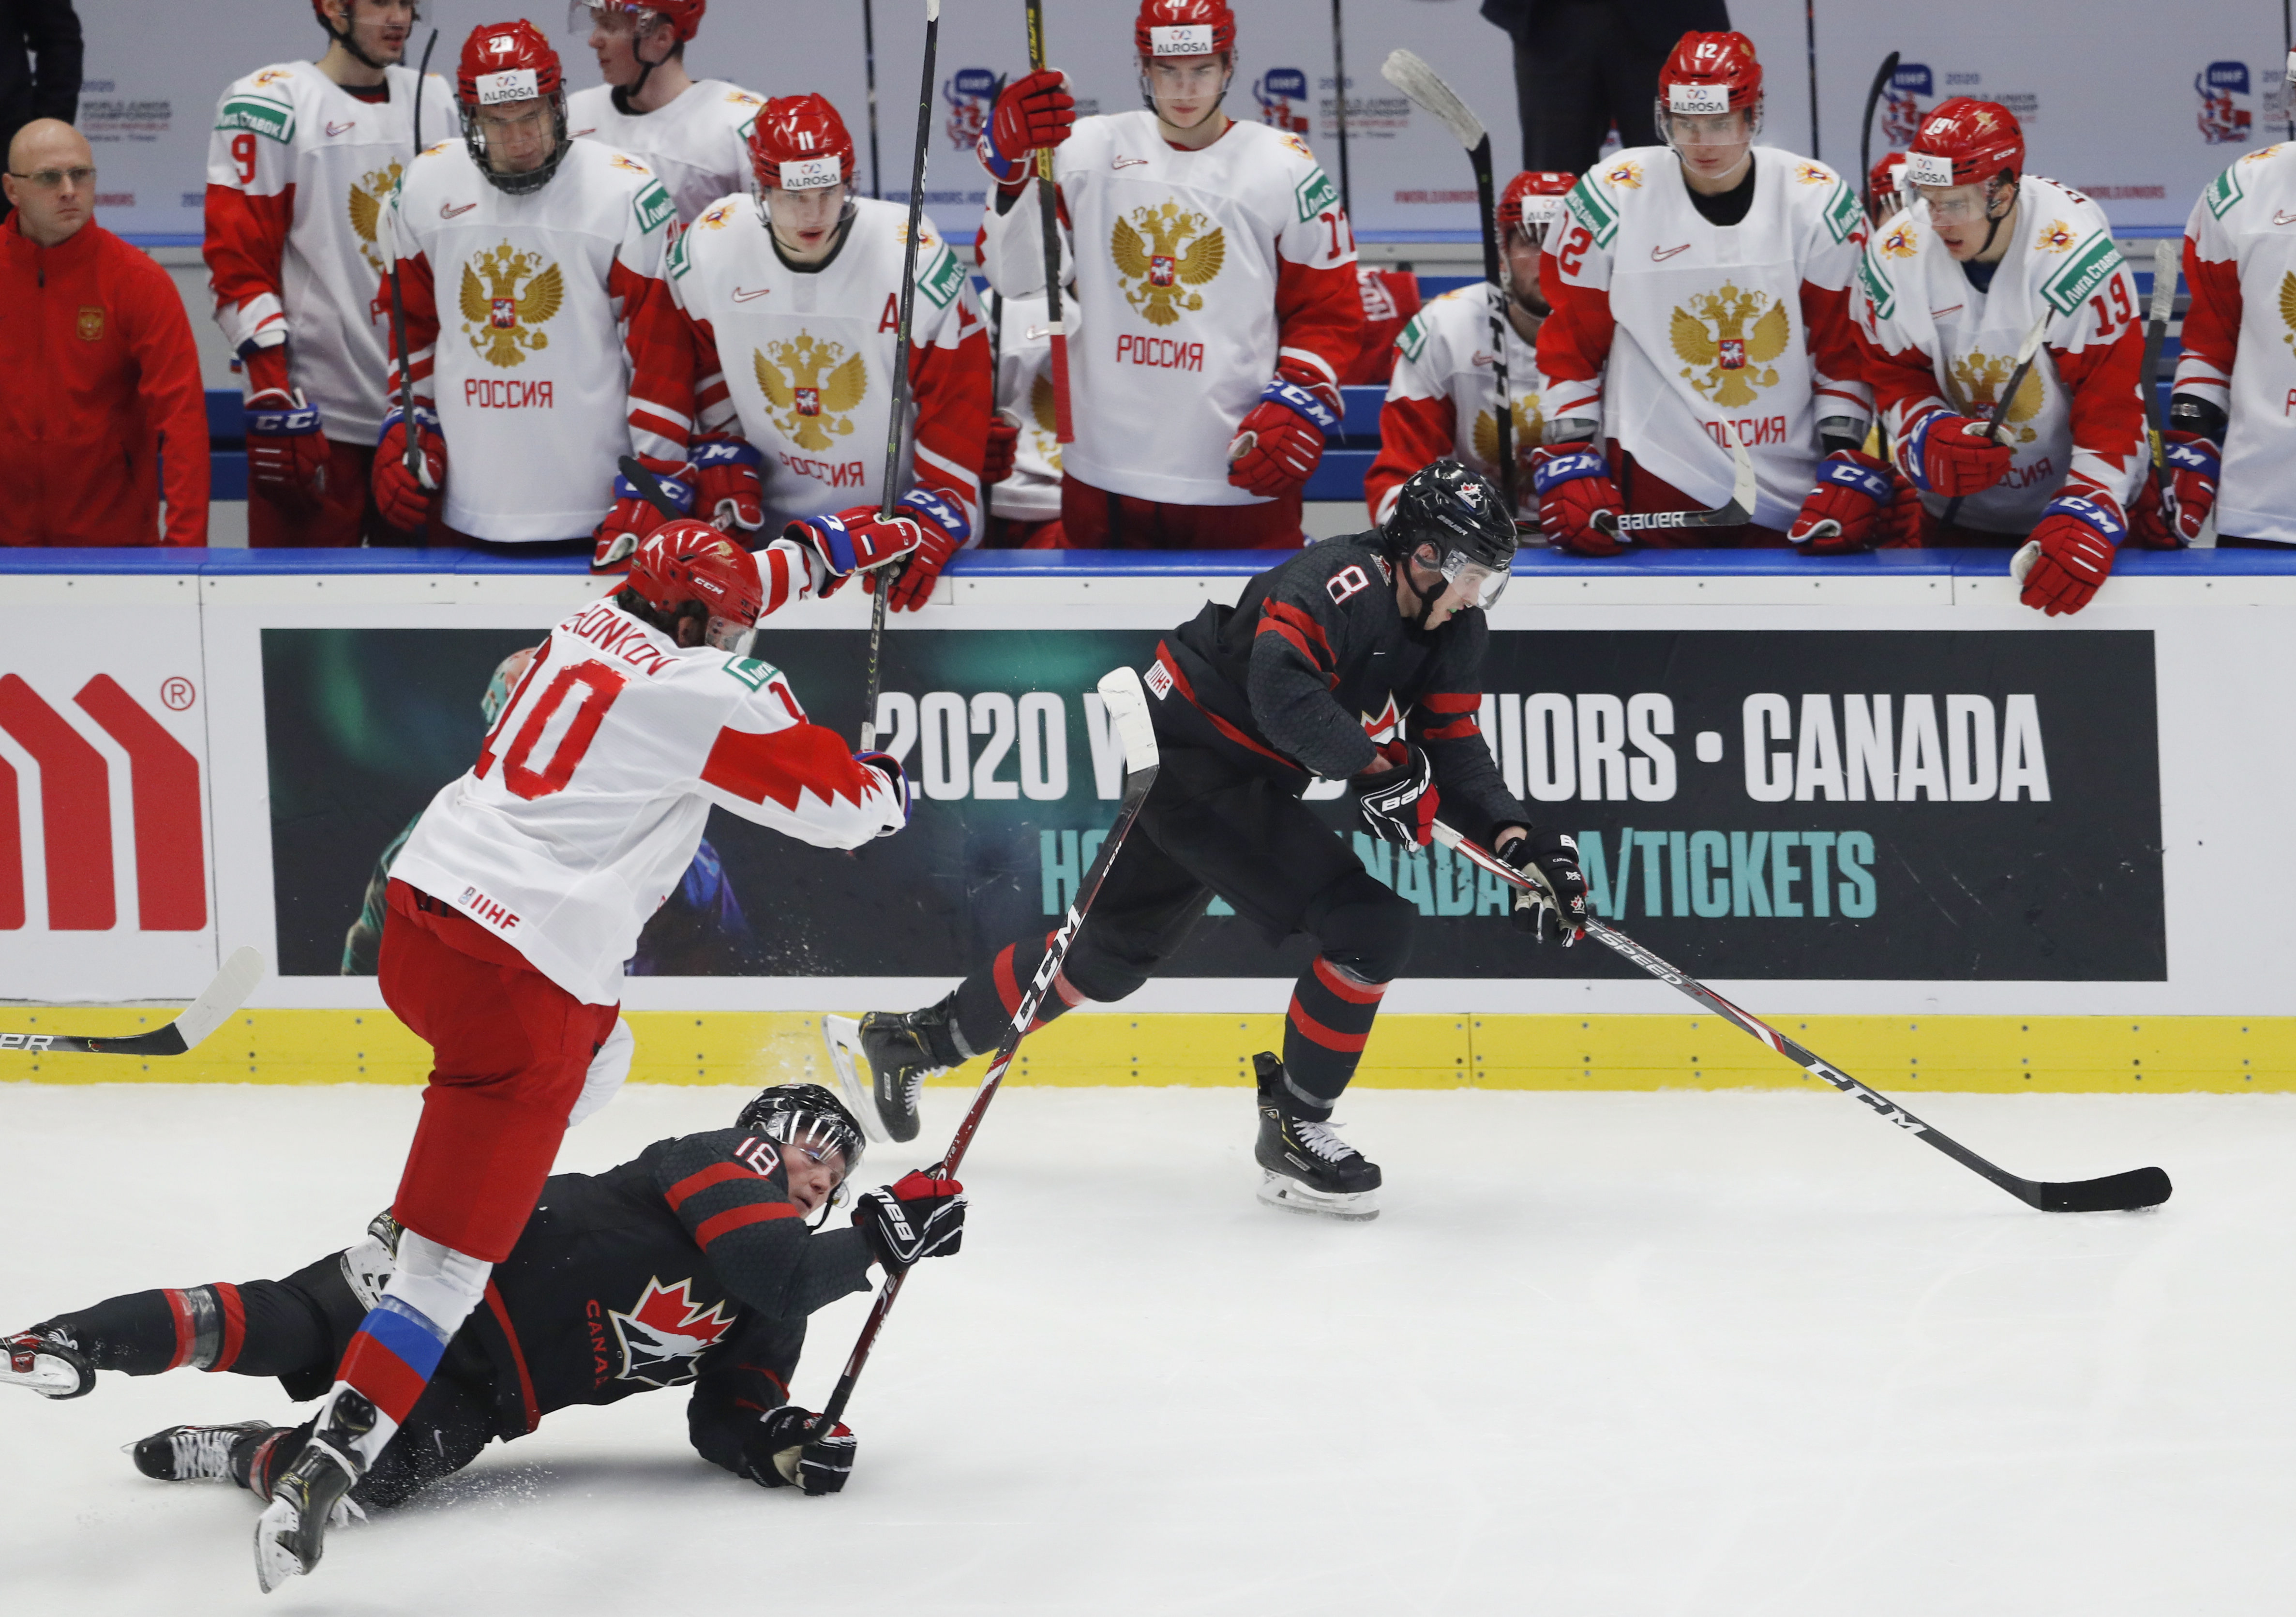 World juniors 2020 Canada wins gold against Russia